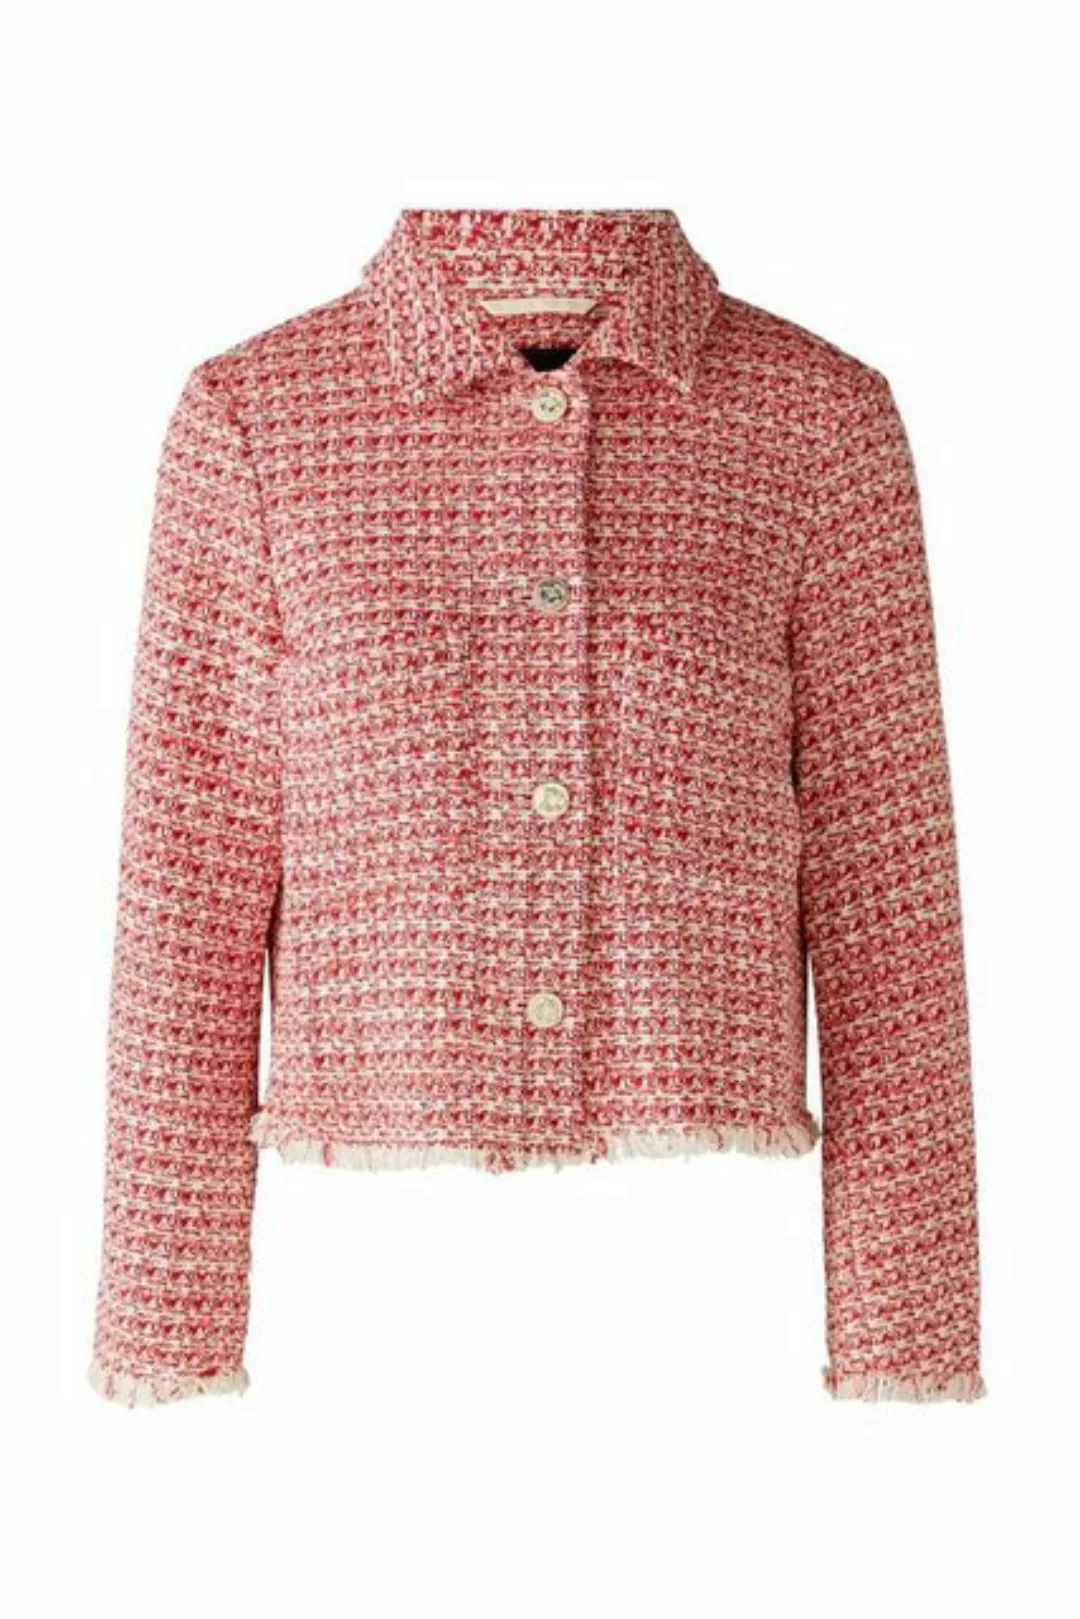 Oui Strickjacke Jacke/Jacket, red white günstig online kaufen